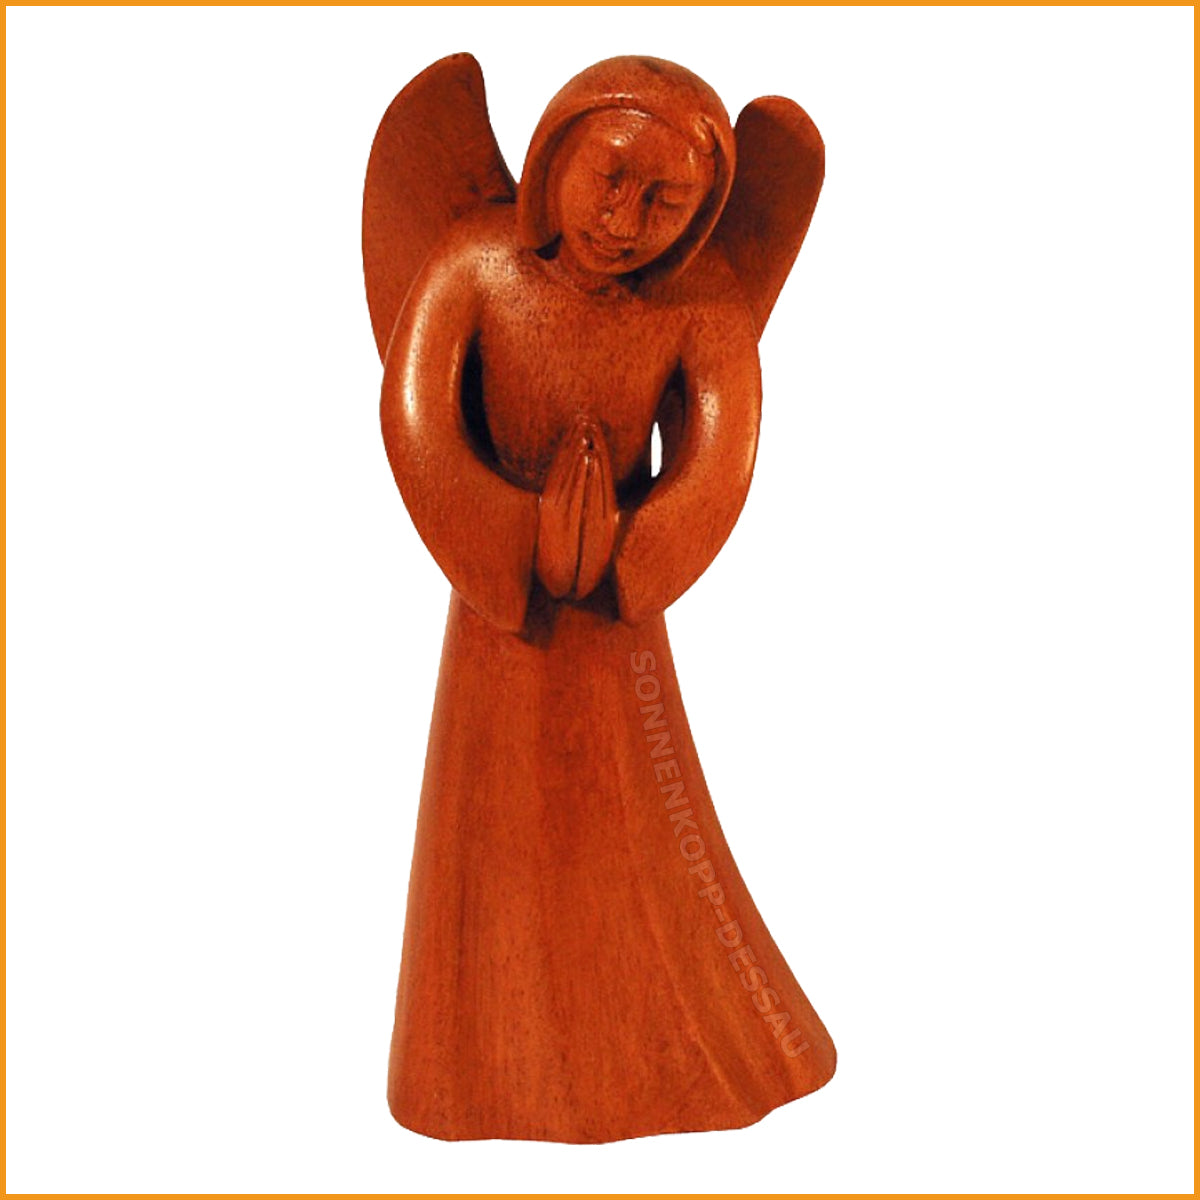 Betender ENGEL Hartholz - Schutzengel Figur Holz - Skulptur Holzengel